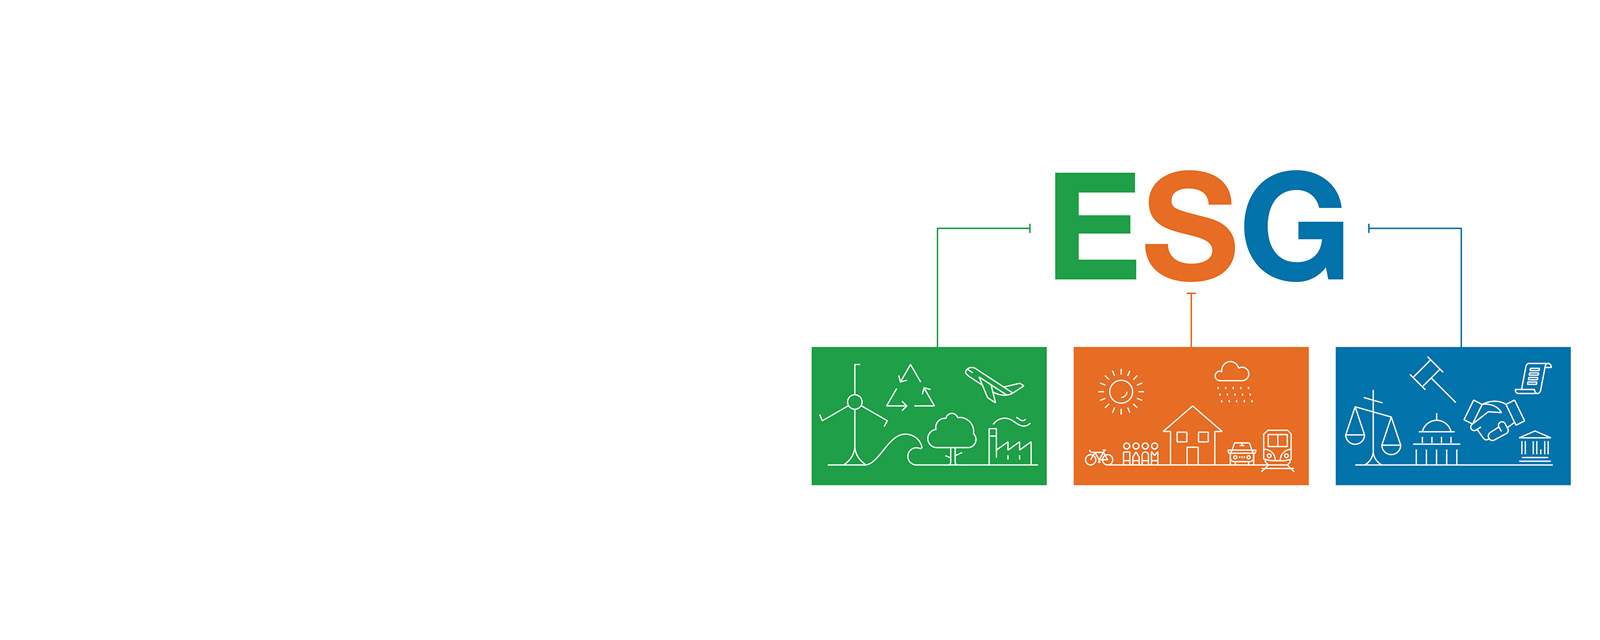 ESG and corresponding icons